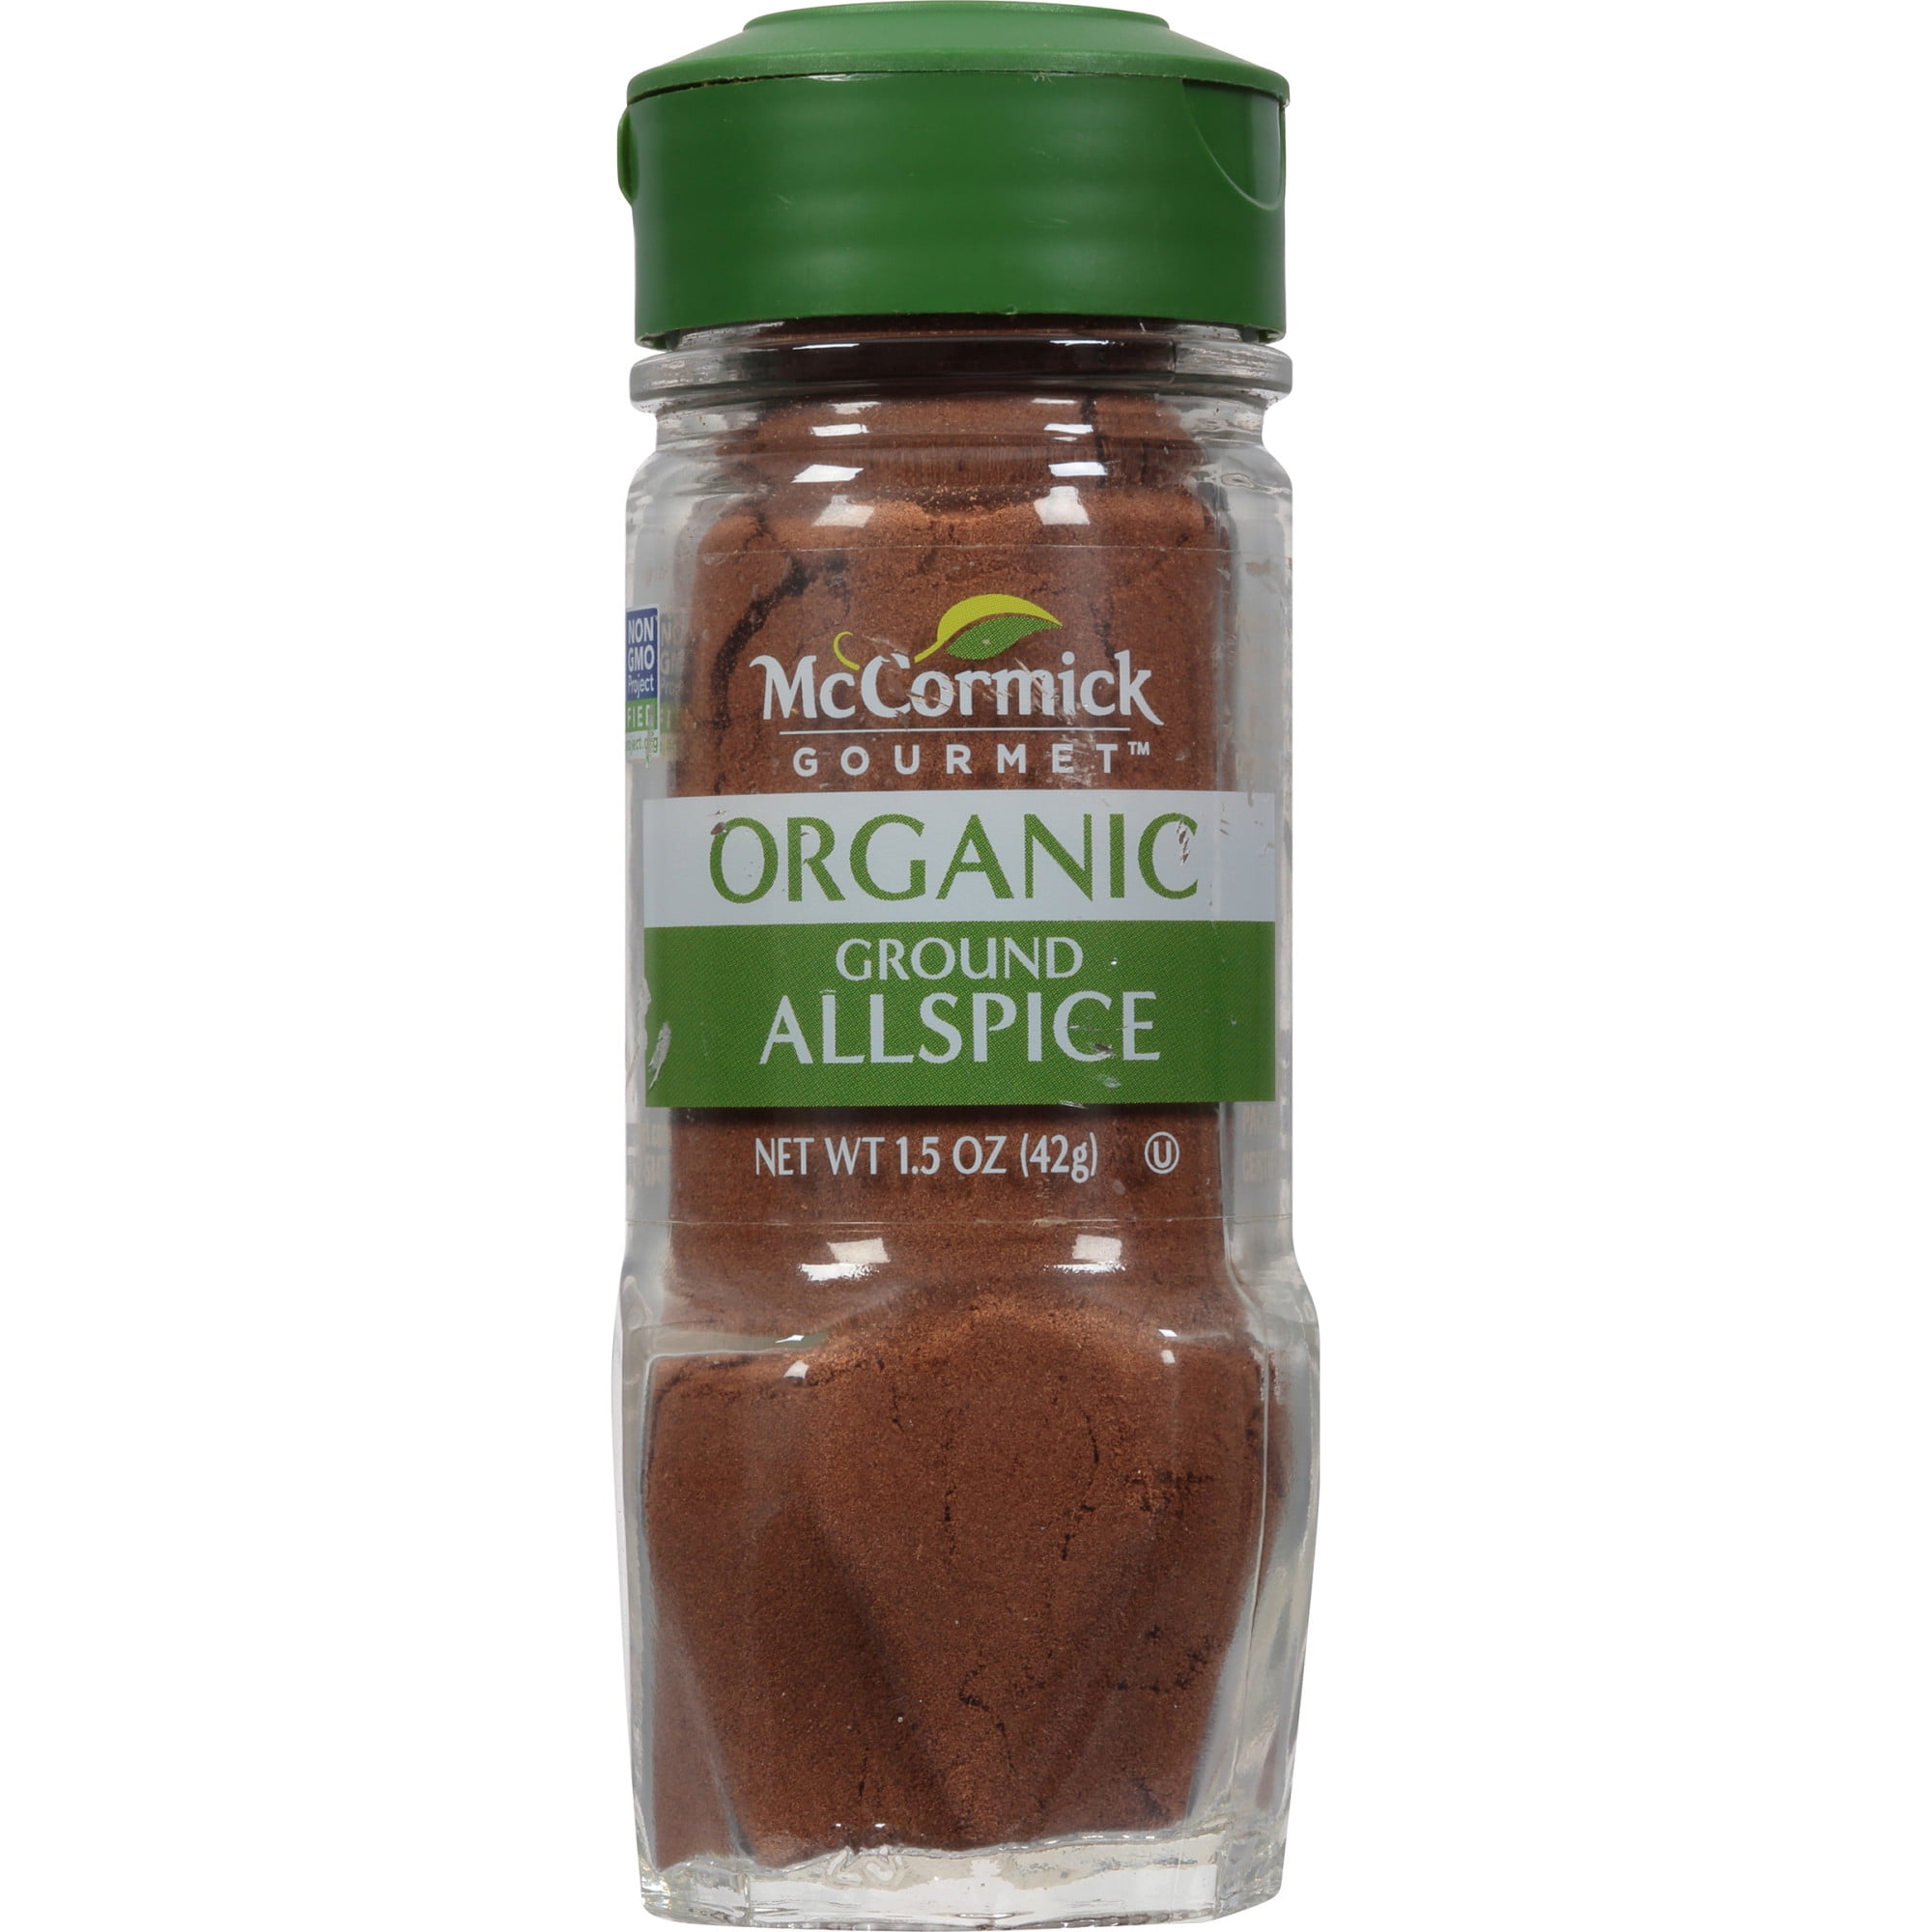 Allspice Ground - Medium - La Flor Spices